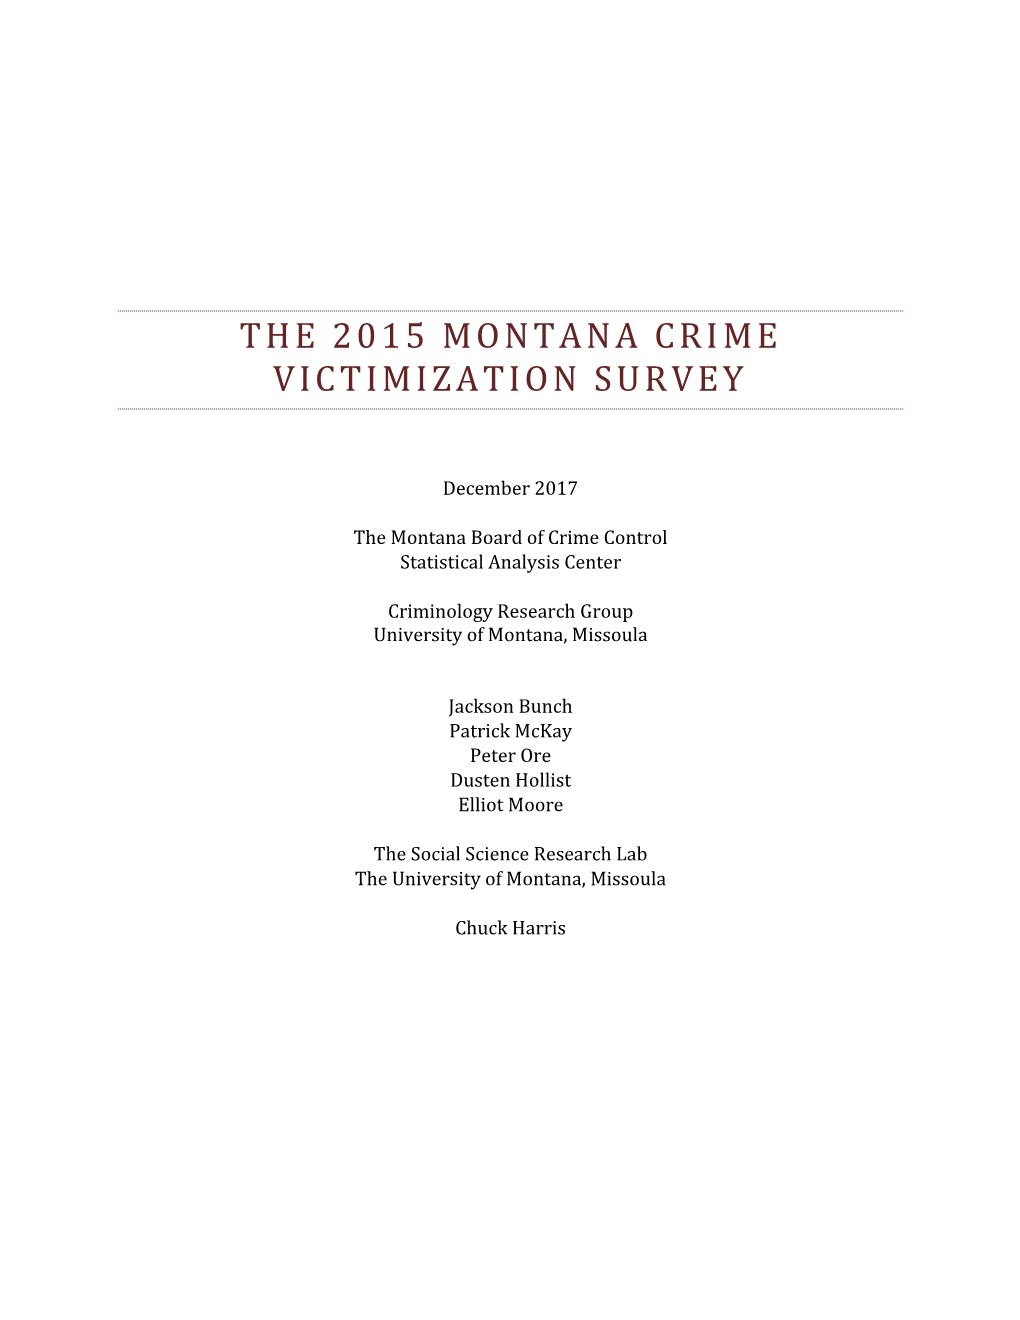 The 2015 Montana Crime Victimization Survey